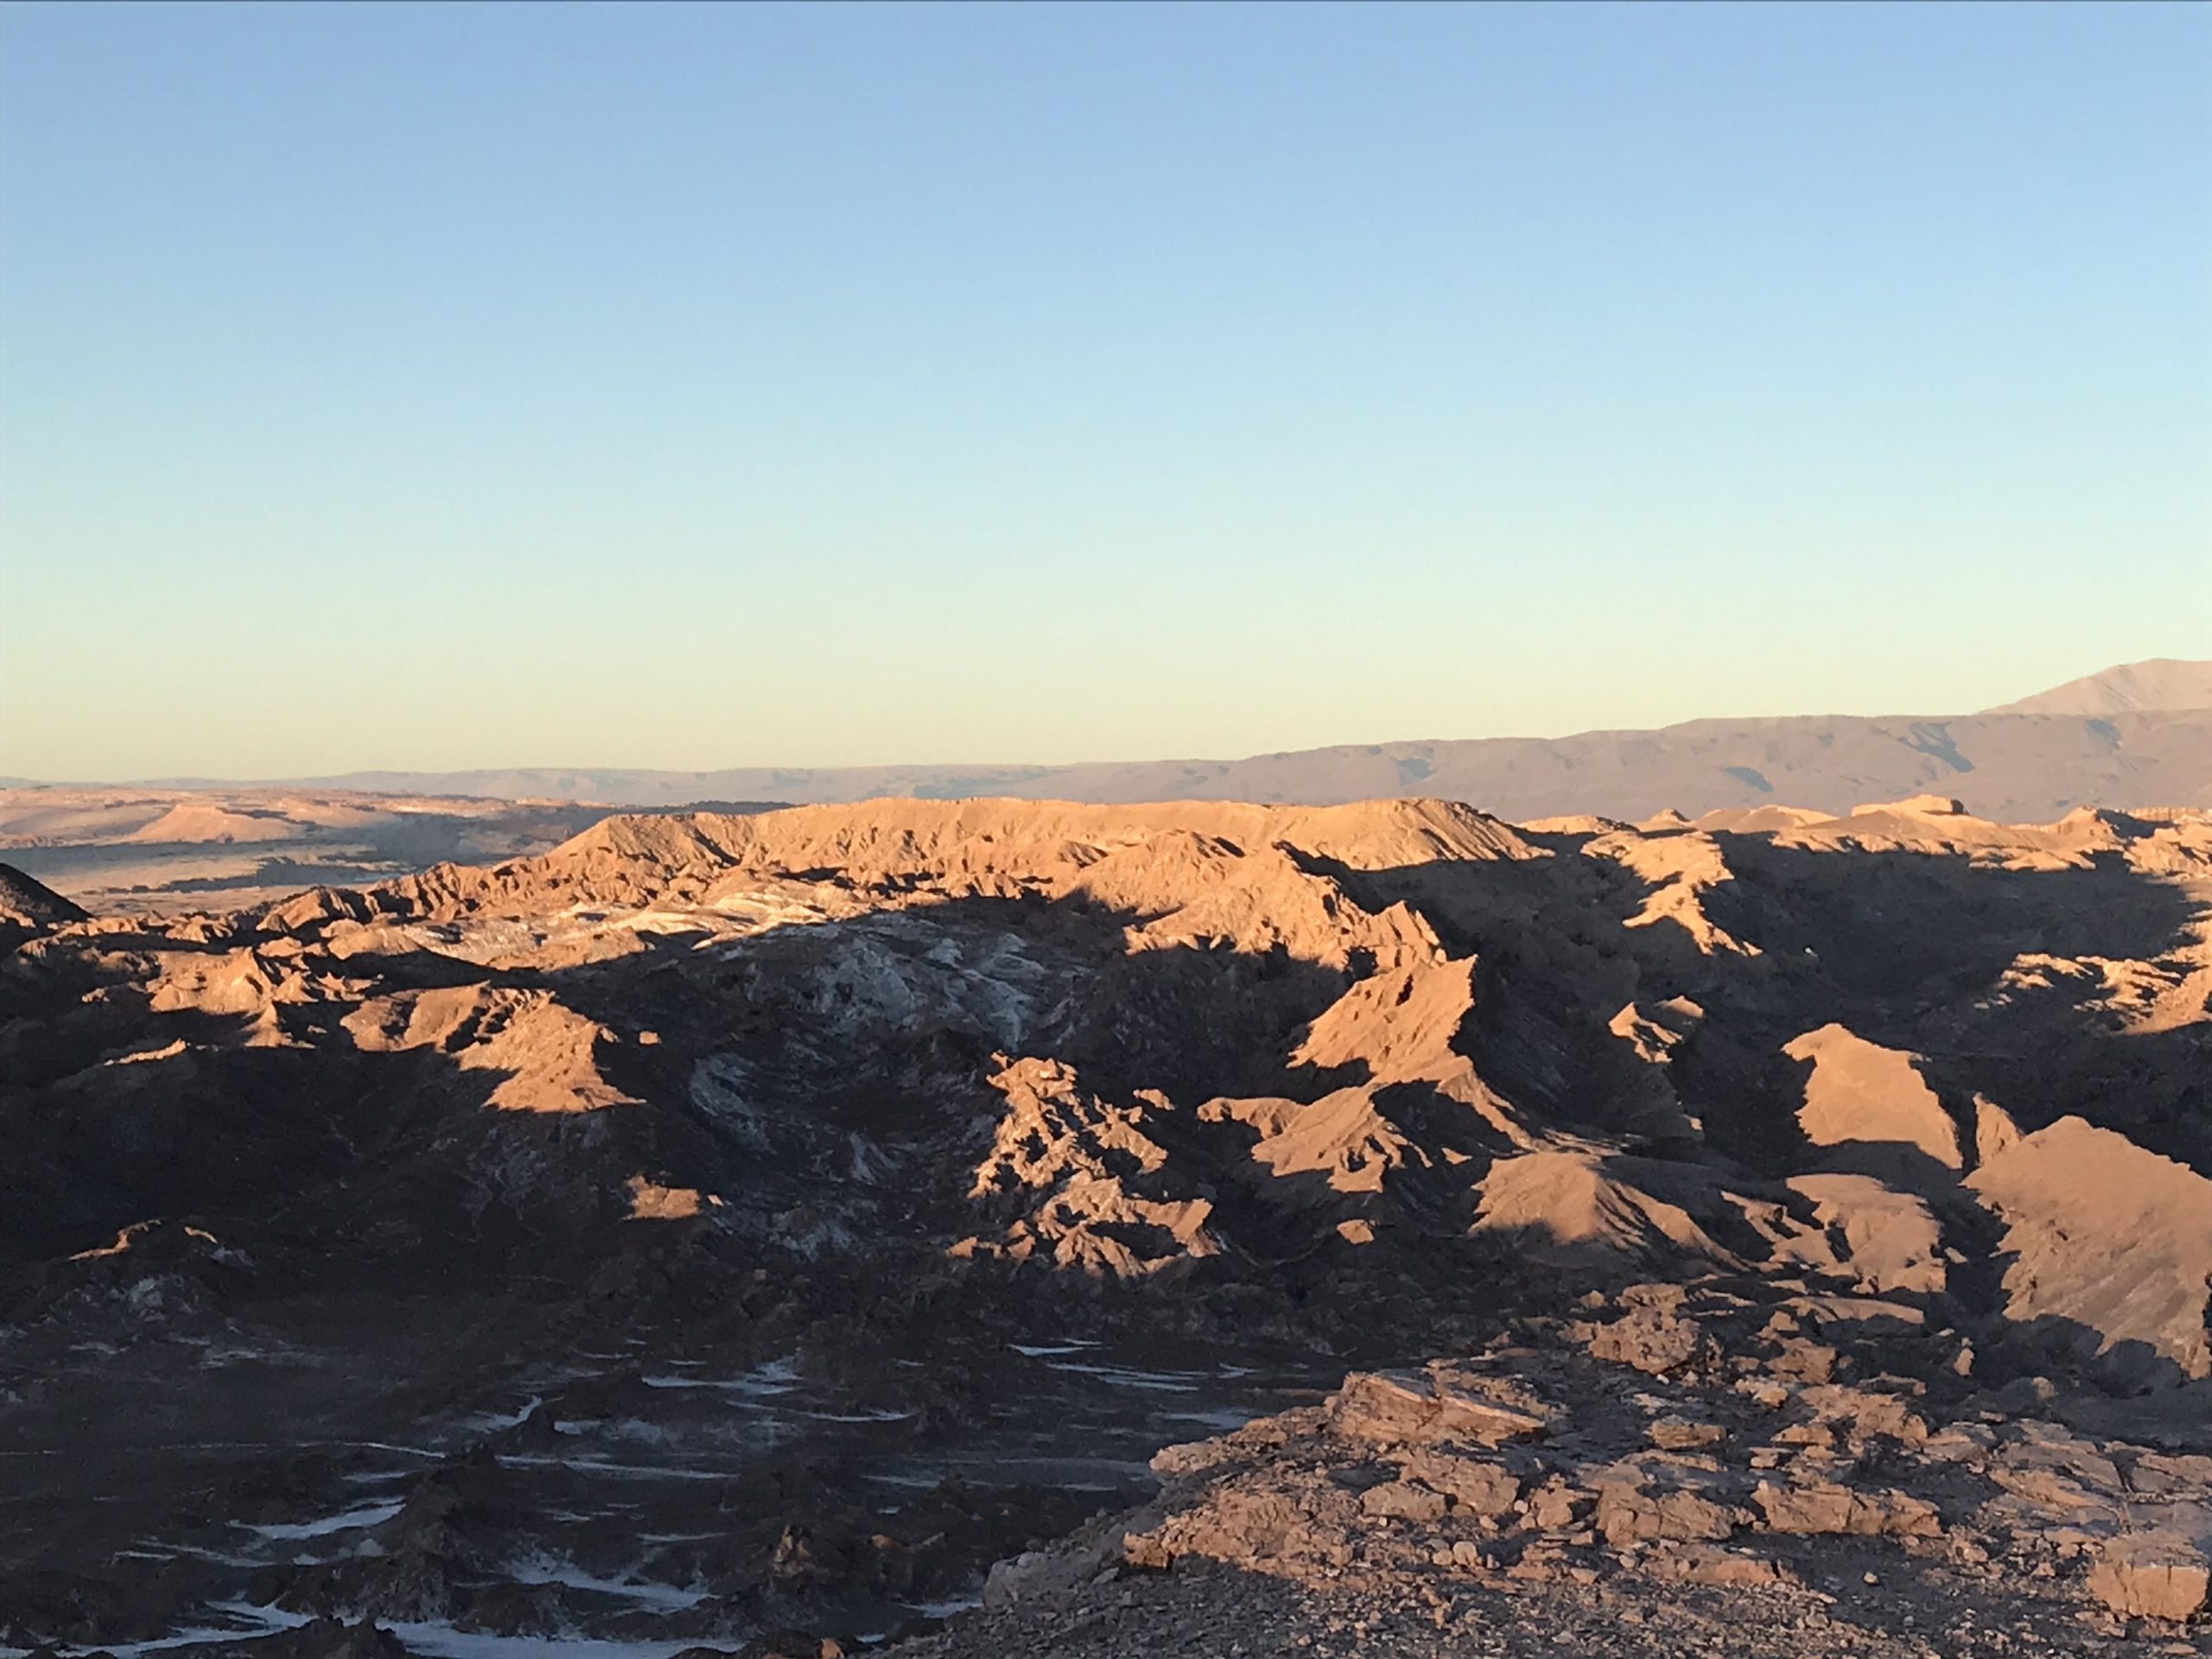 Gaynor's view of the Atacama 